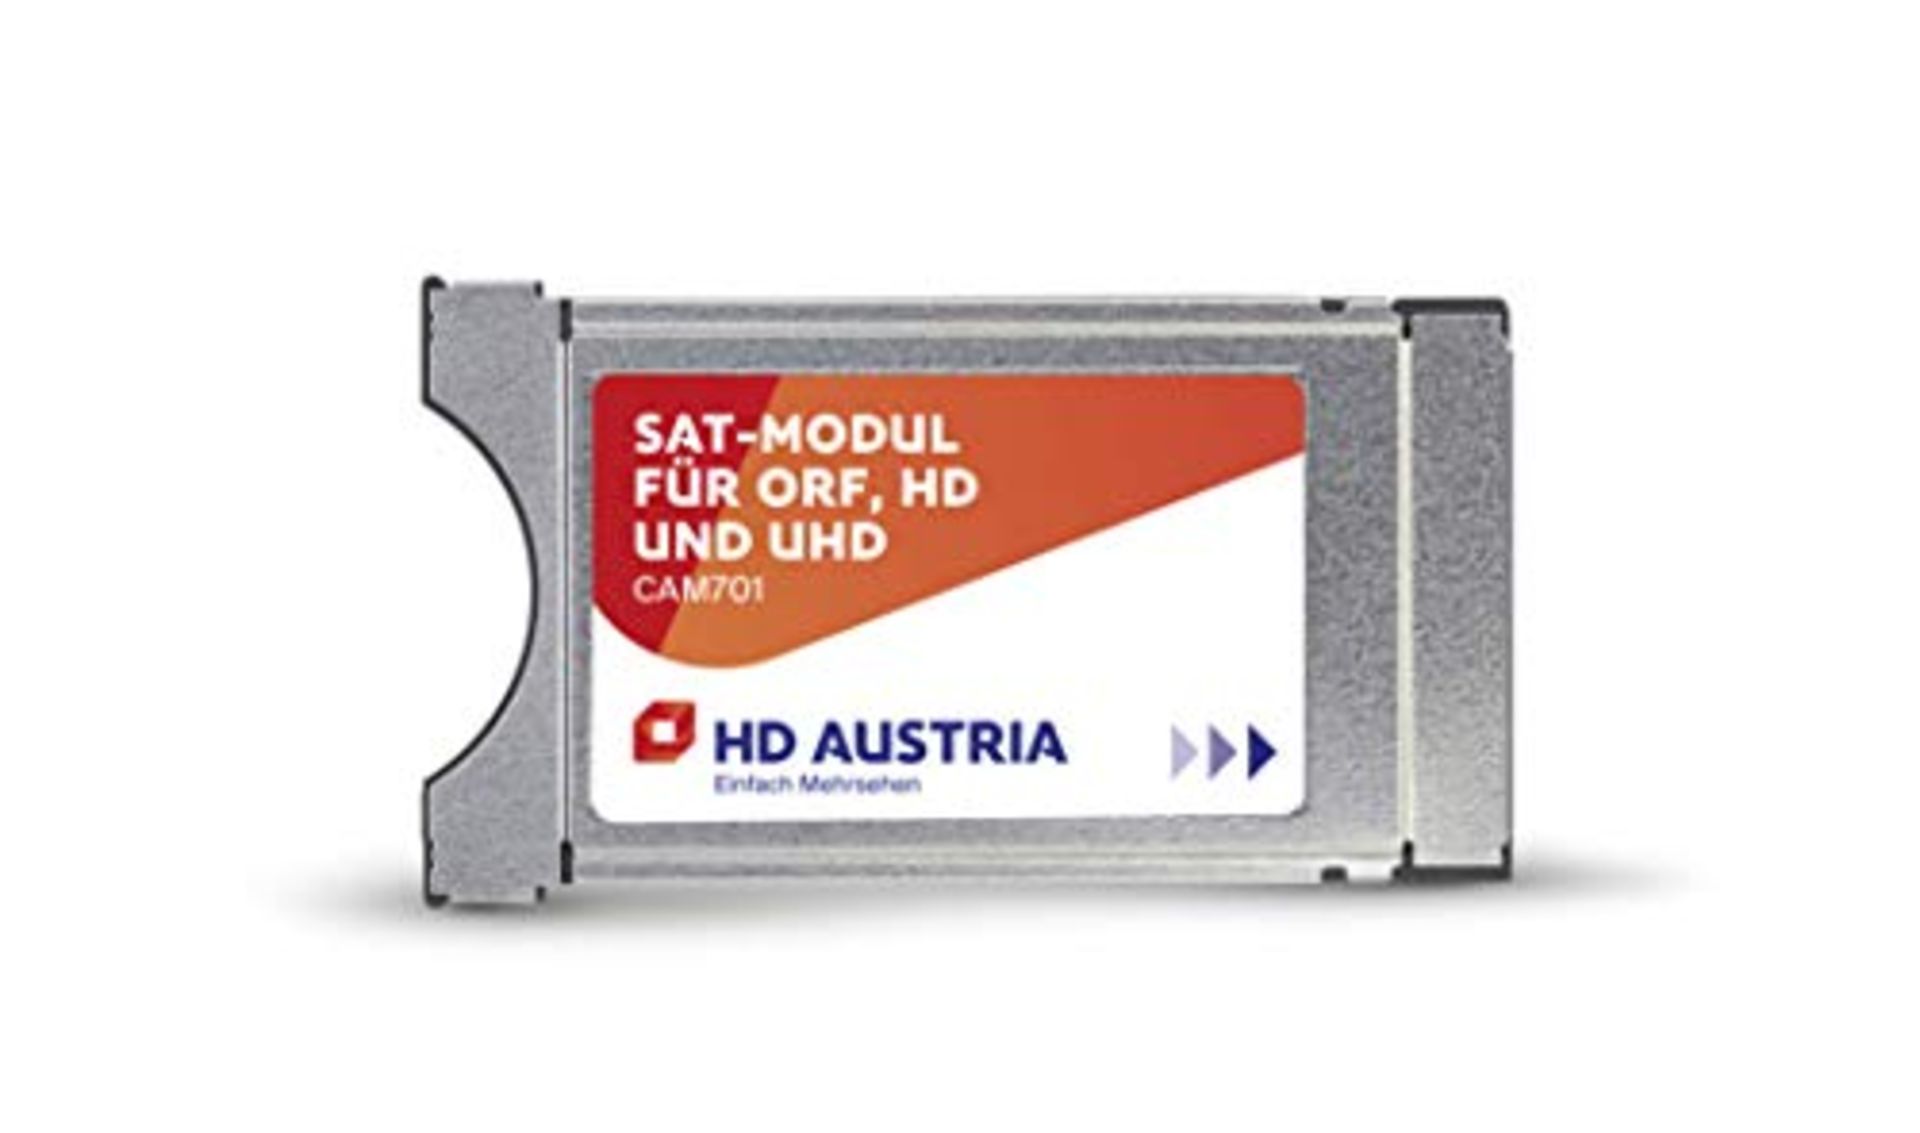 RRP £62.00 HD Austria CI module CAM701 HD card (ORF HD, ATV HD, PULS 4 HD, ORF activation, over 8